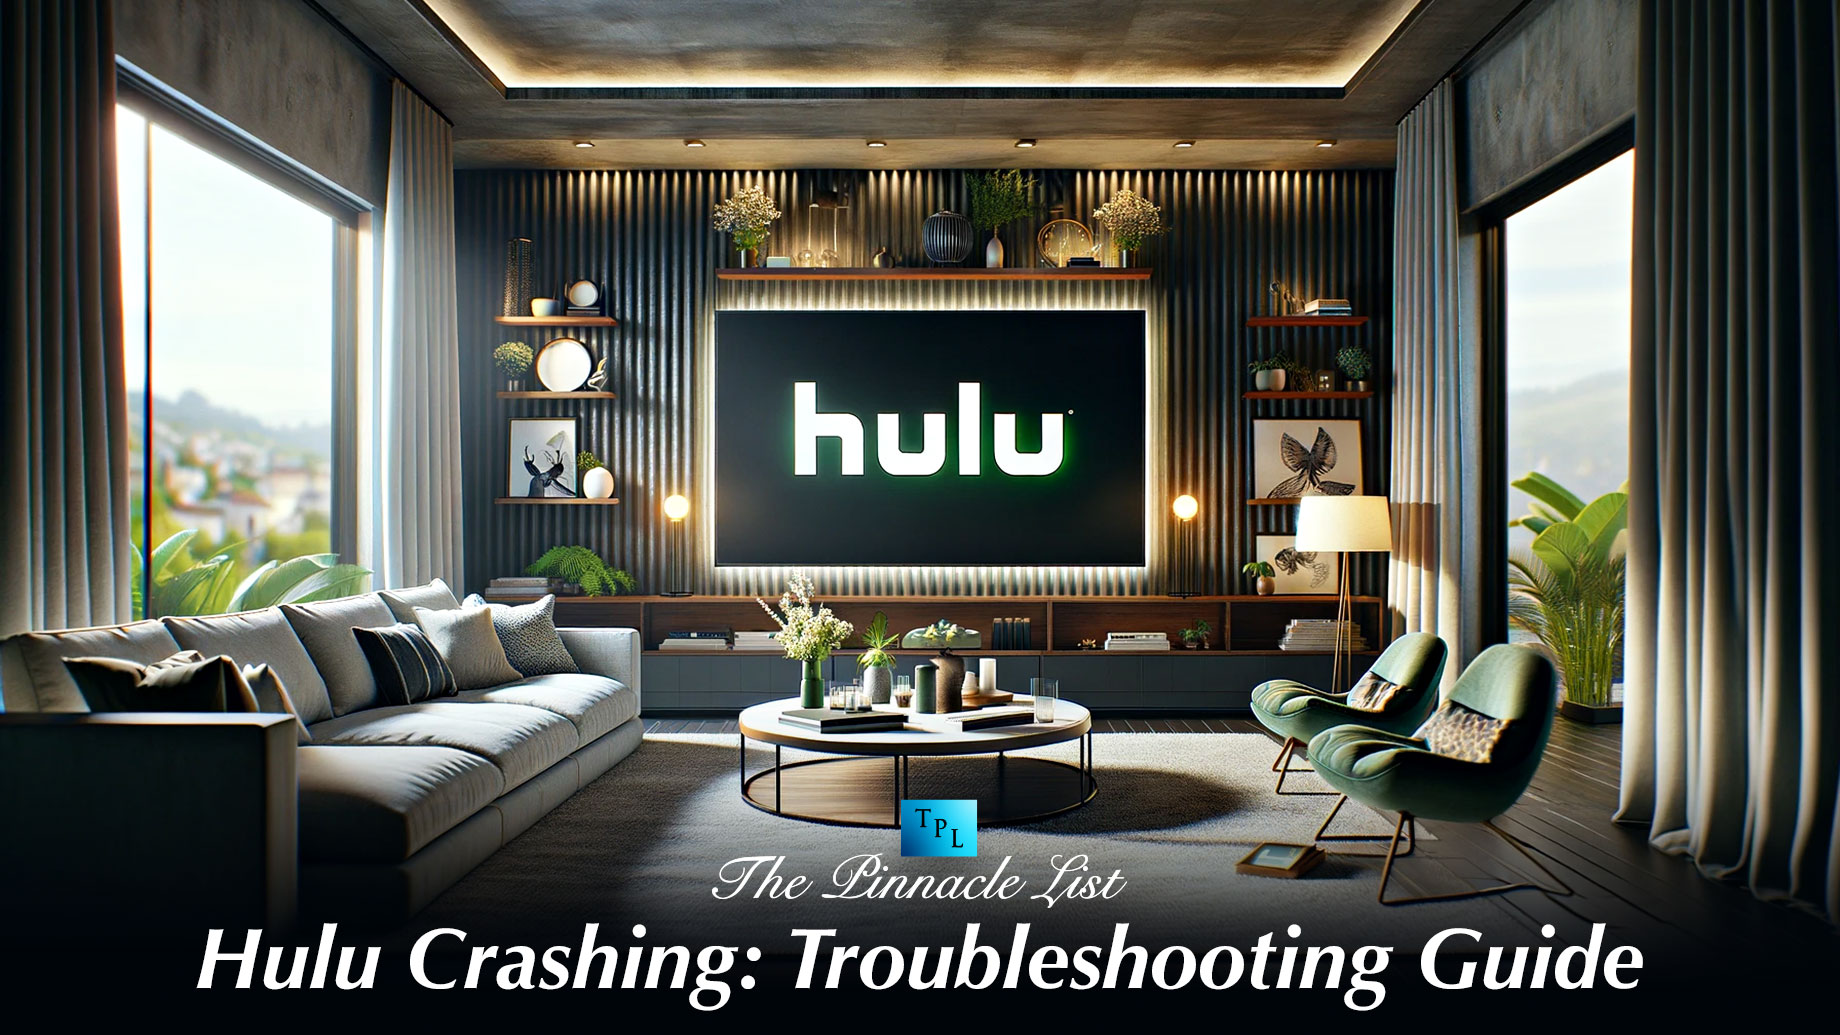 Hulu Crashing: Troubleshooting Guide